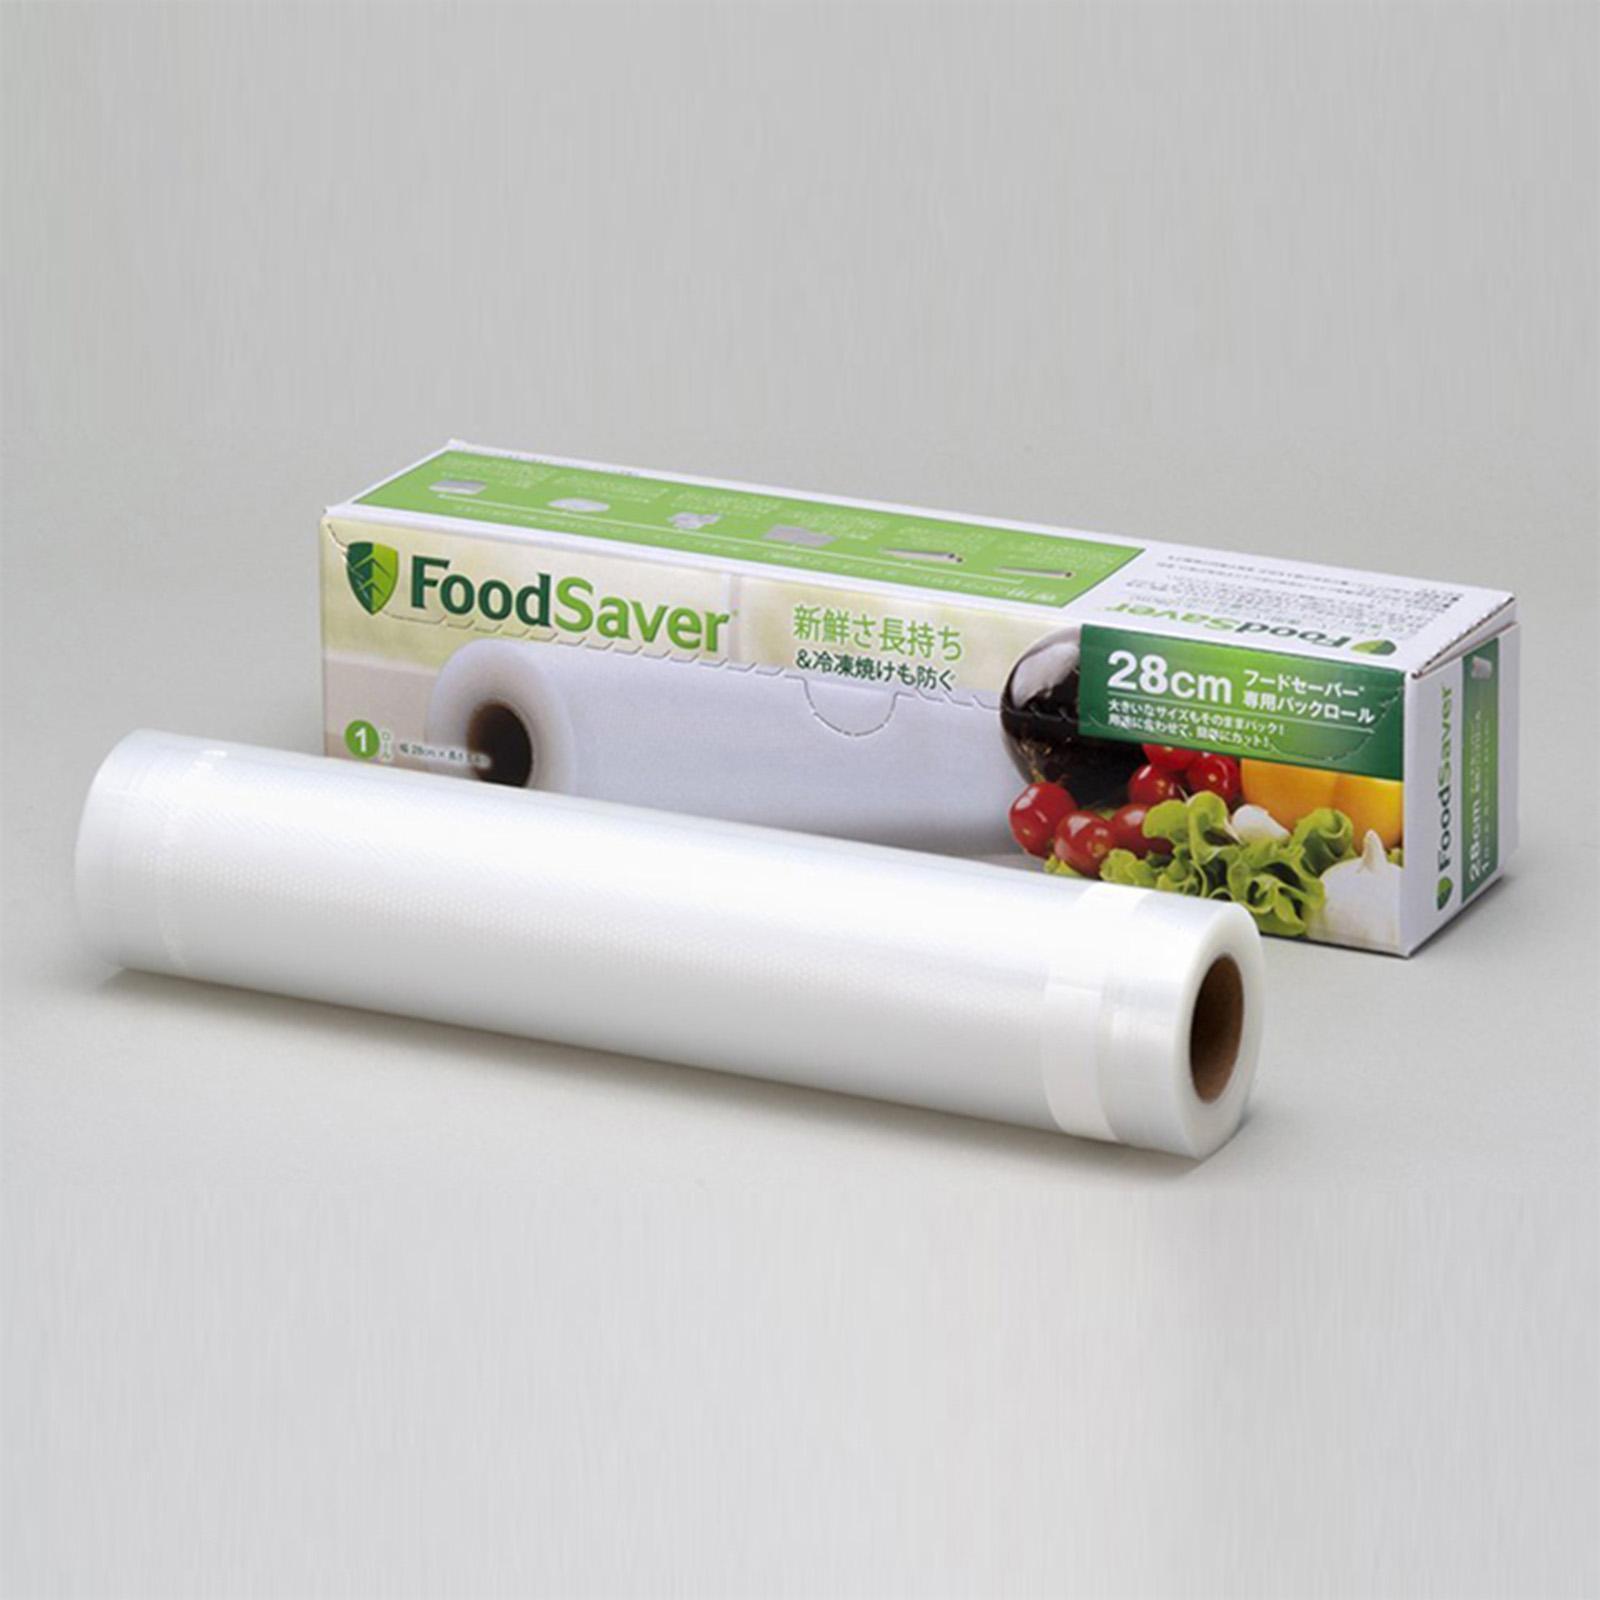 FoodSaver 28 Cm Vacuum Bag Single Roll